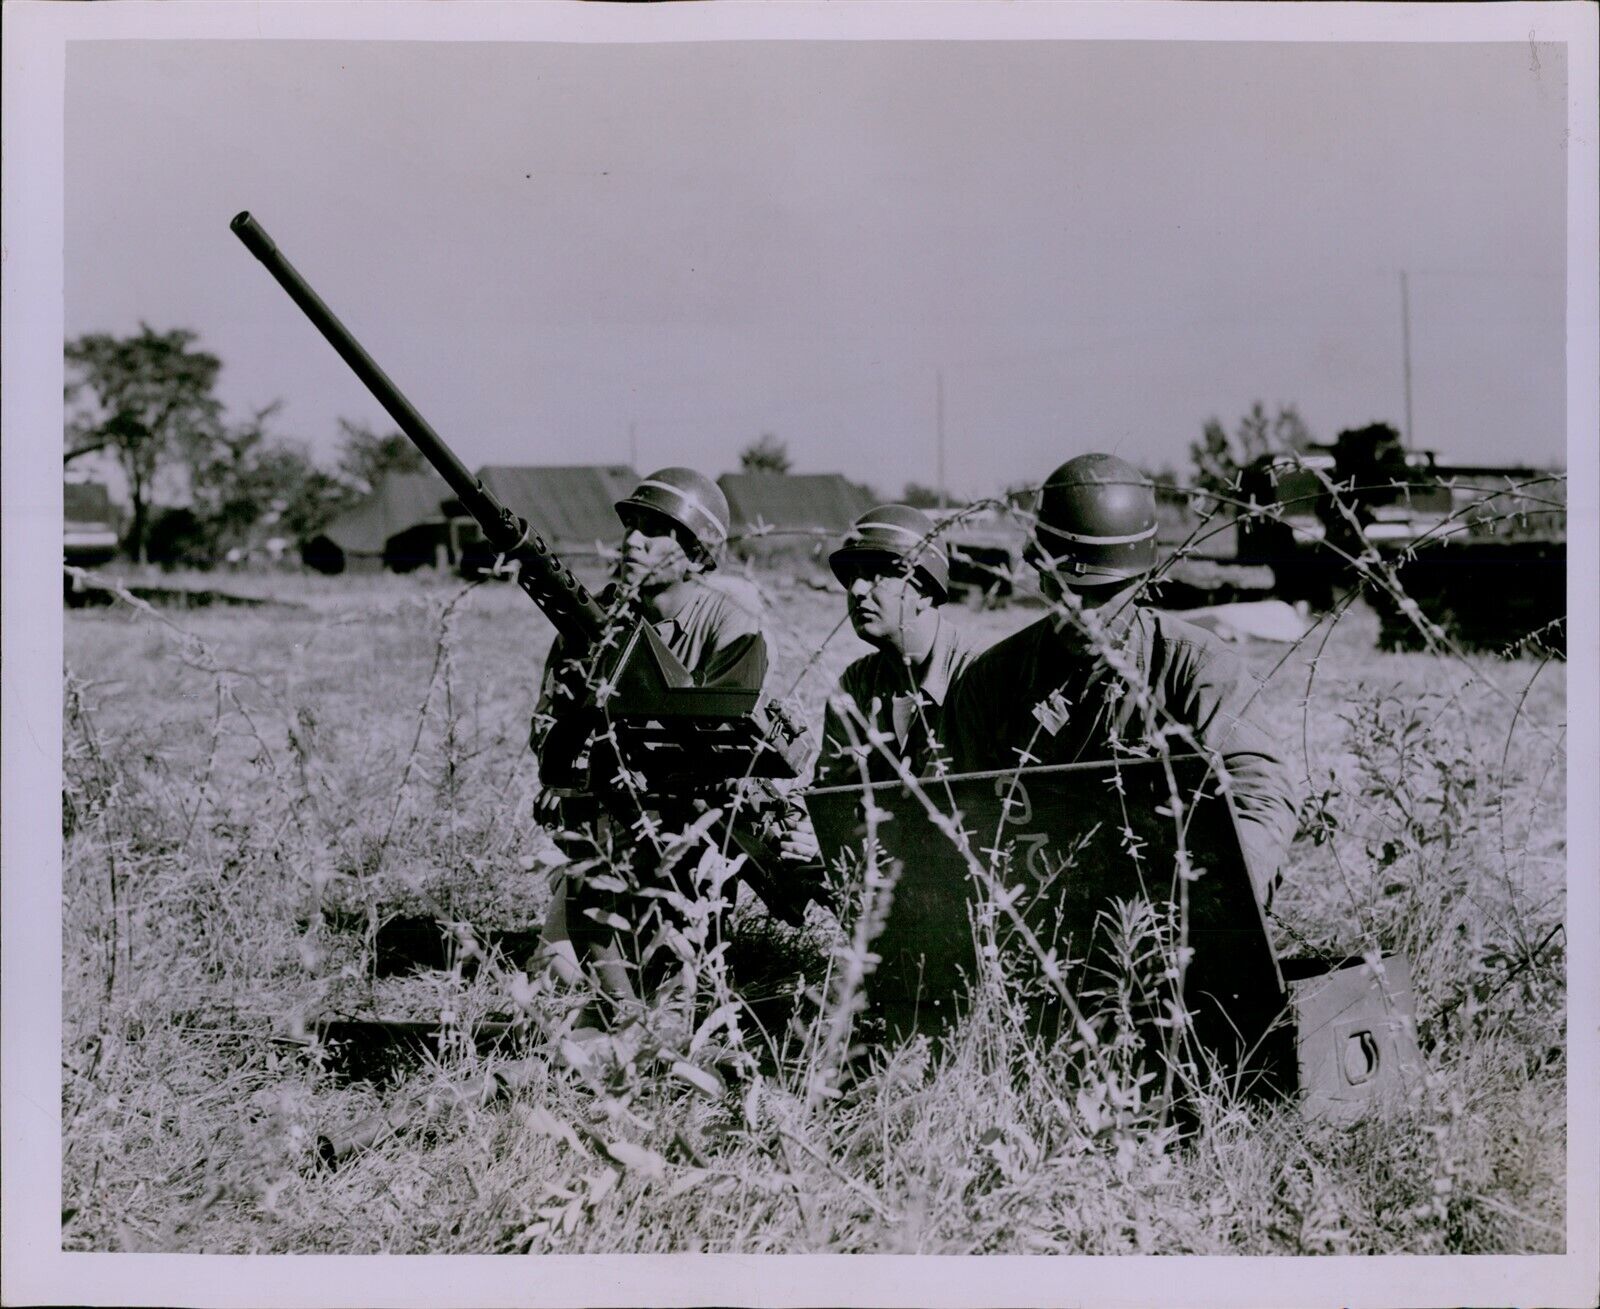 LG819 1951 Original McGraw Photo UNITED STATES ARMY Anti Aircraft Gun Aiming